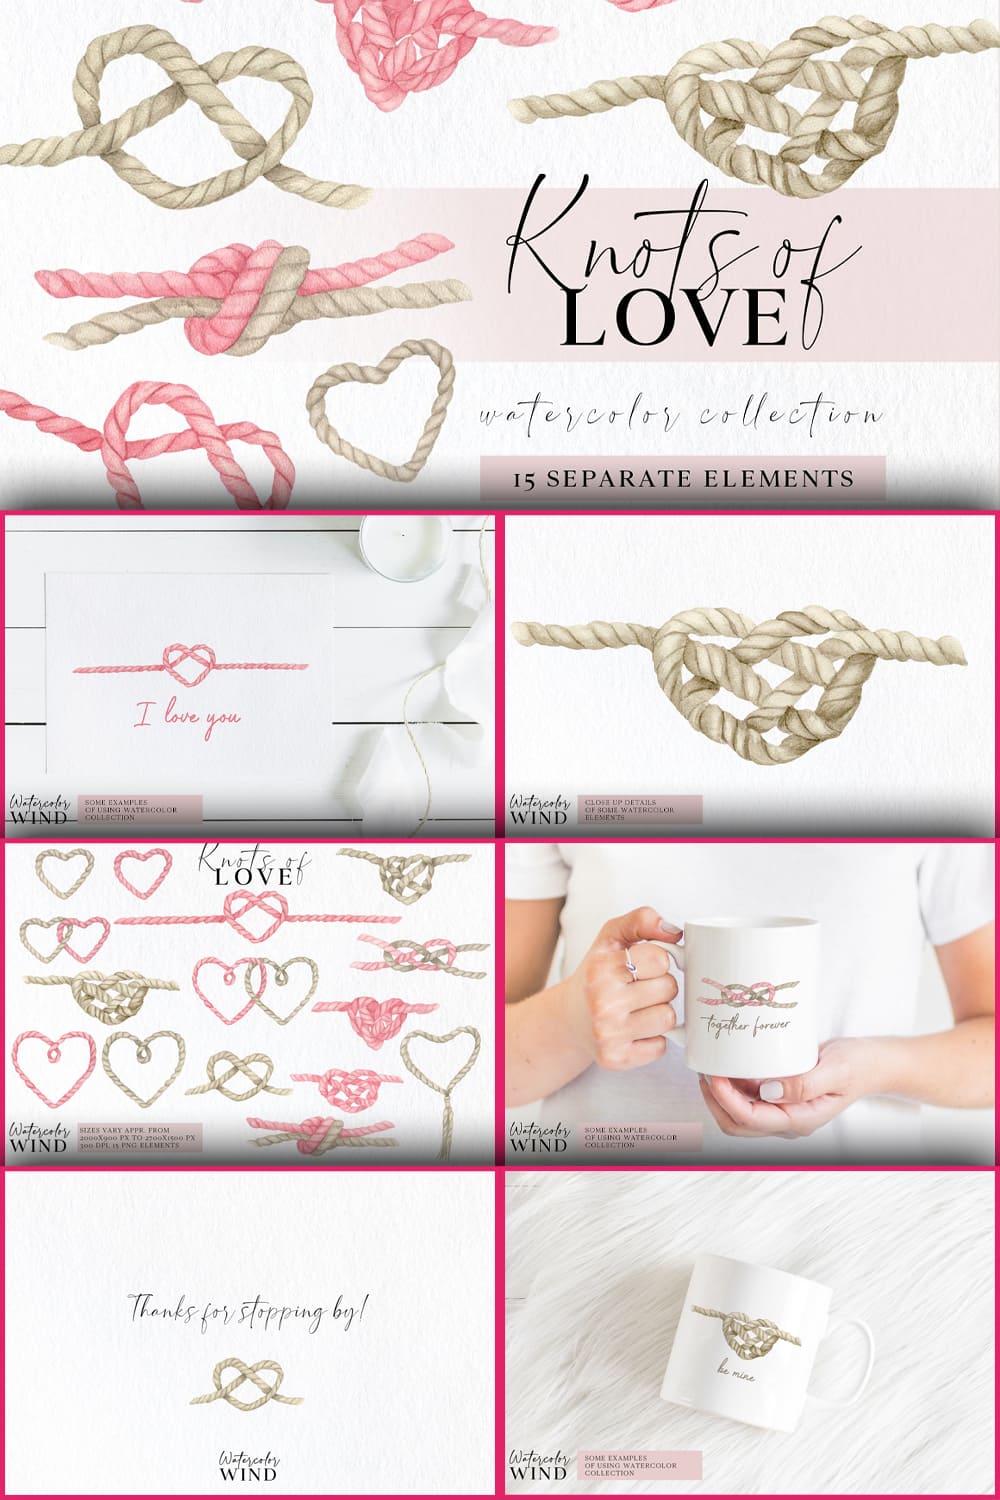 Seven slides depicting knots of love.